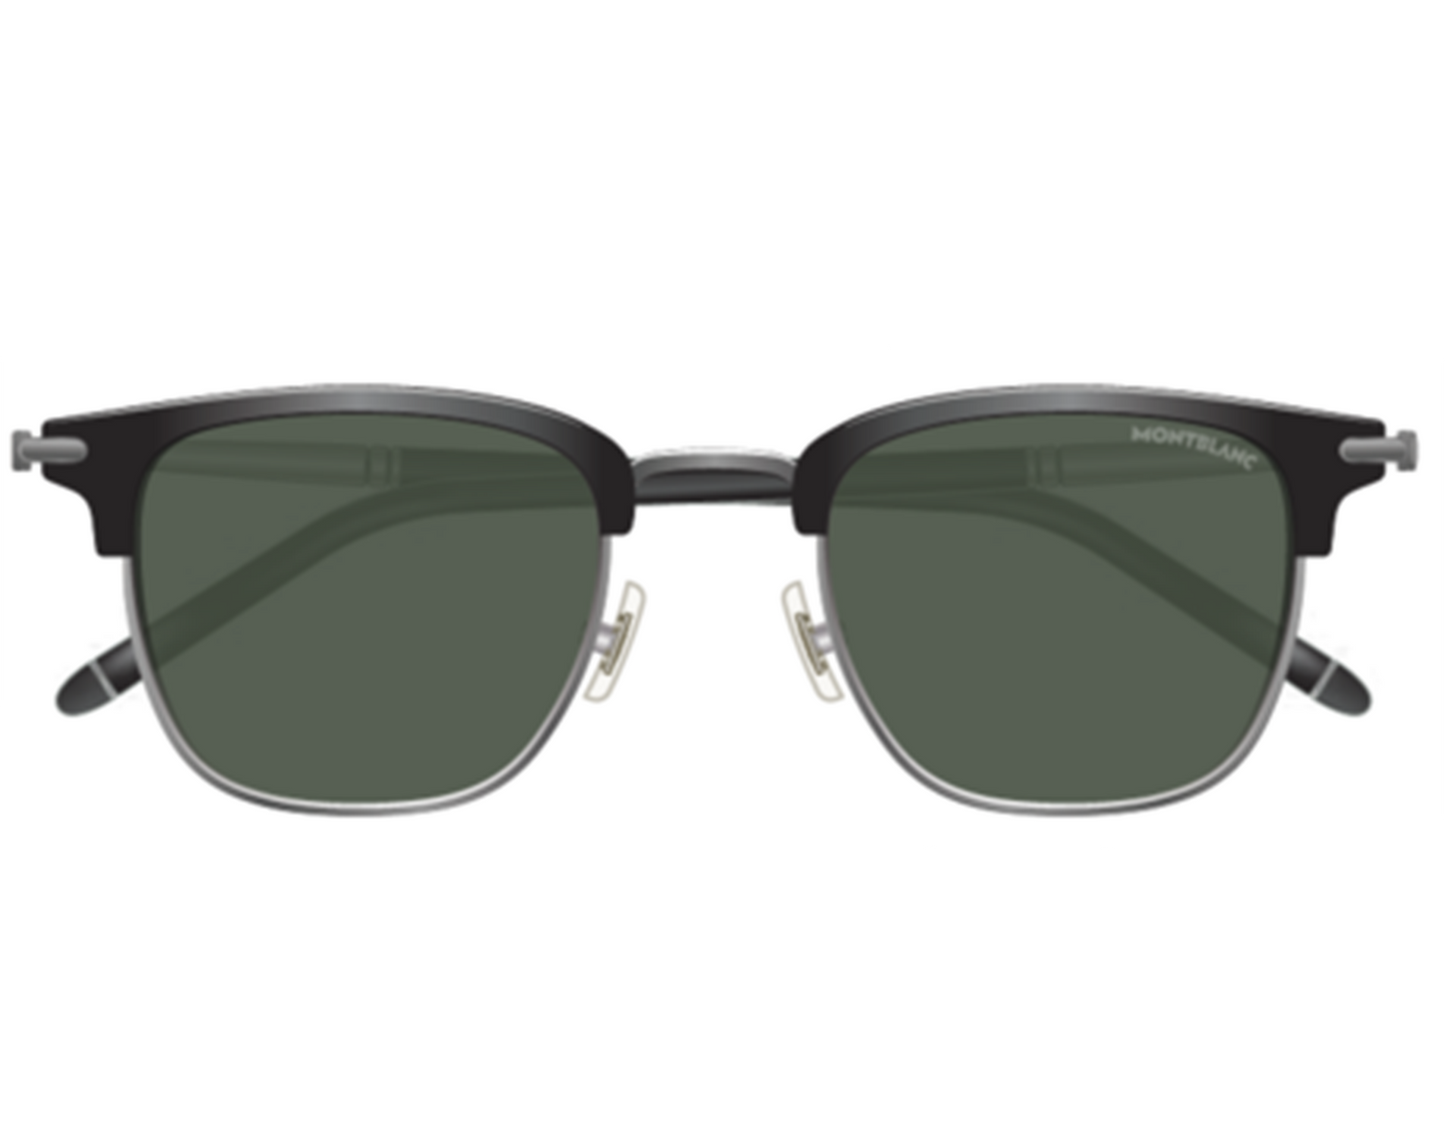 Mont blanc MB0242S-006 55mm New Sunglasses